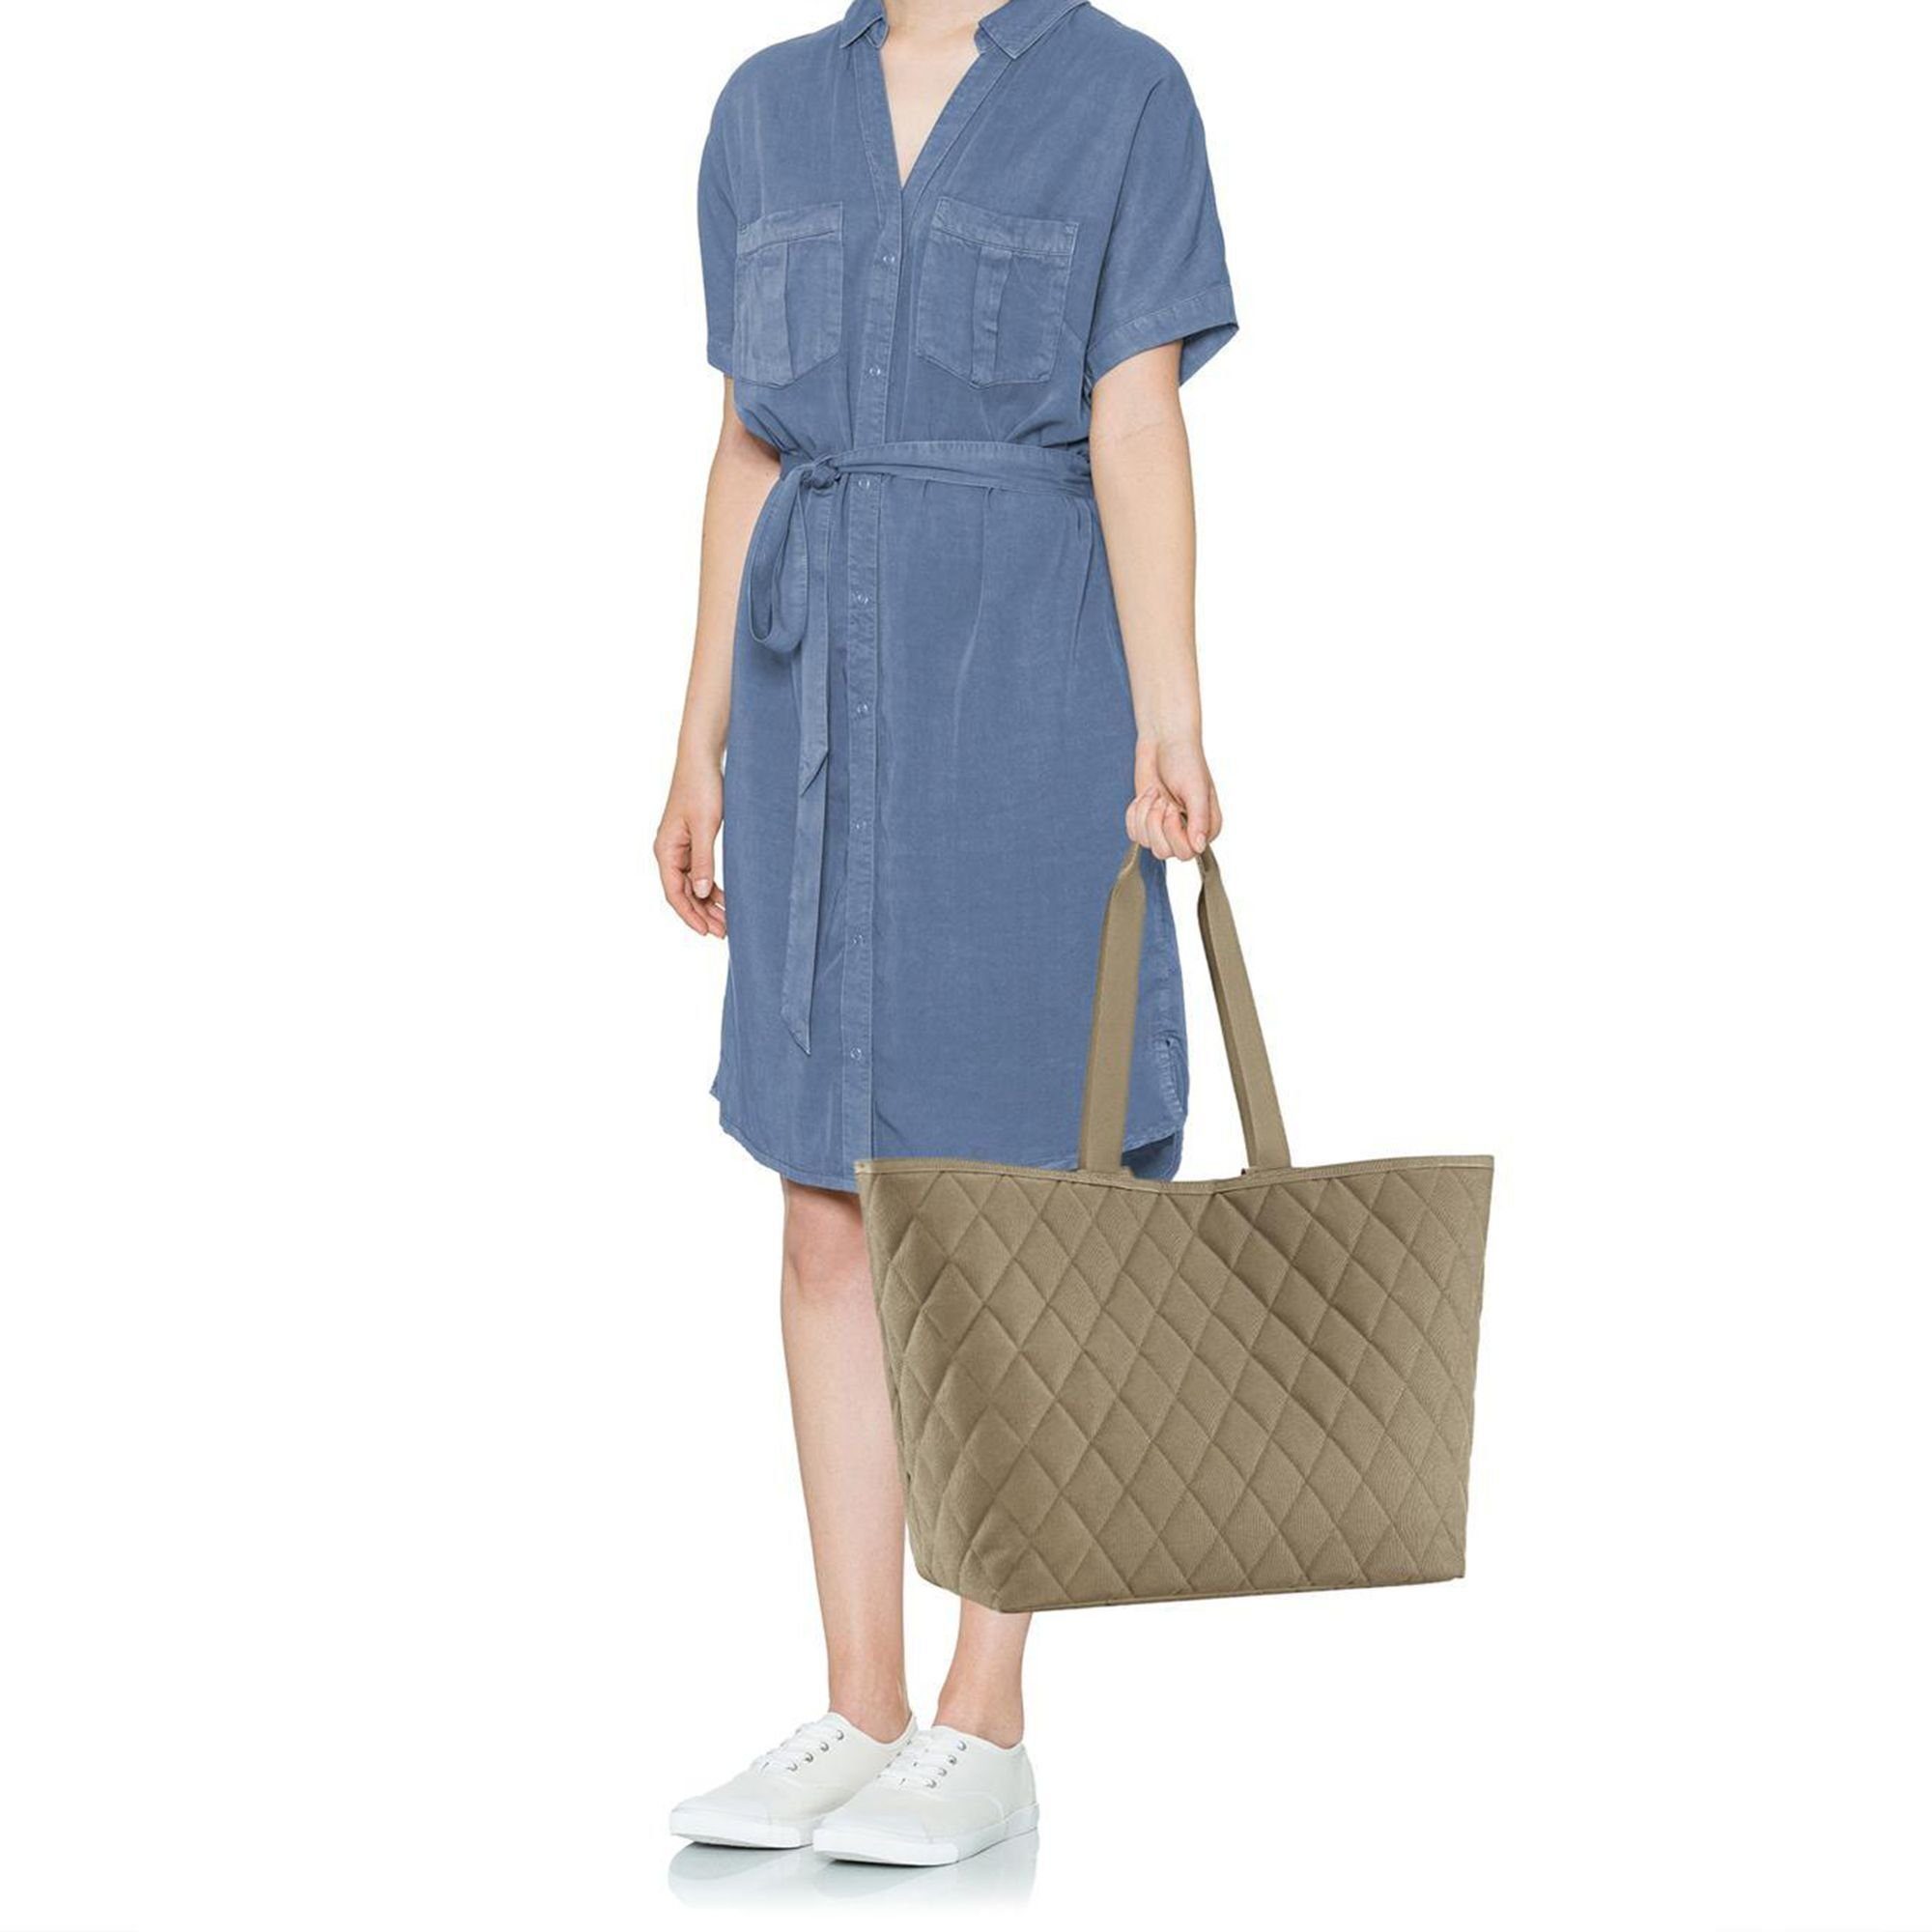 Shopper Polyester REISENTHEL® olive Shopping, rhombus